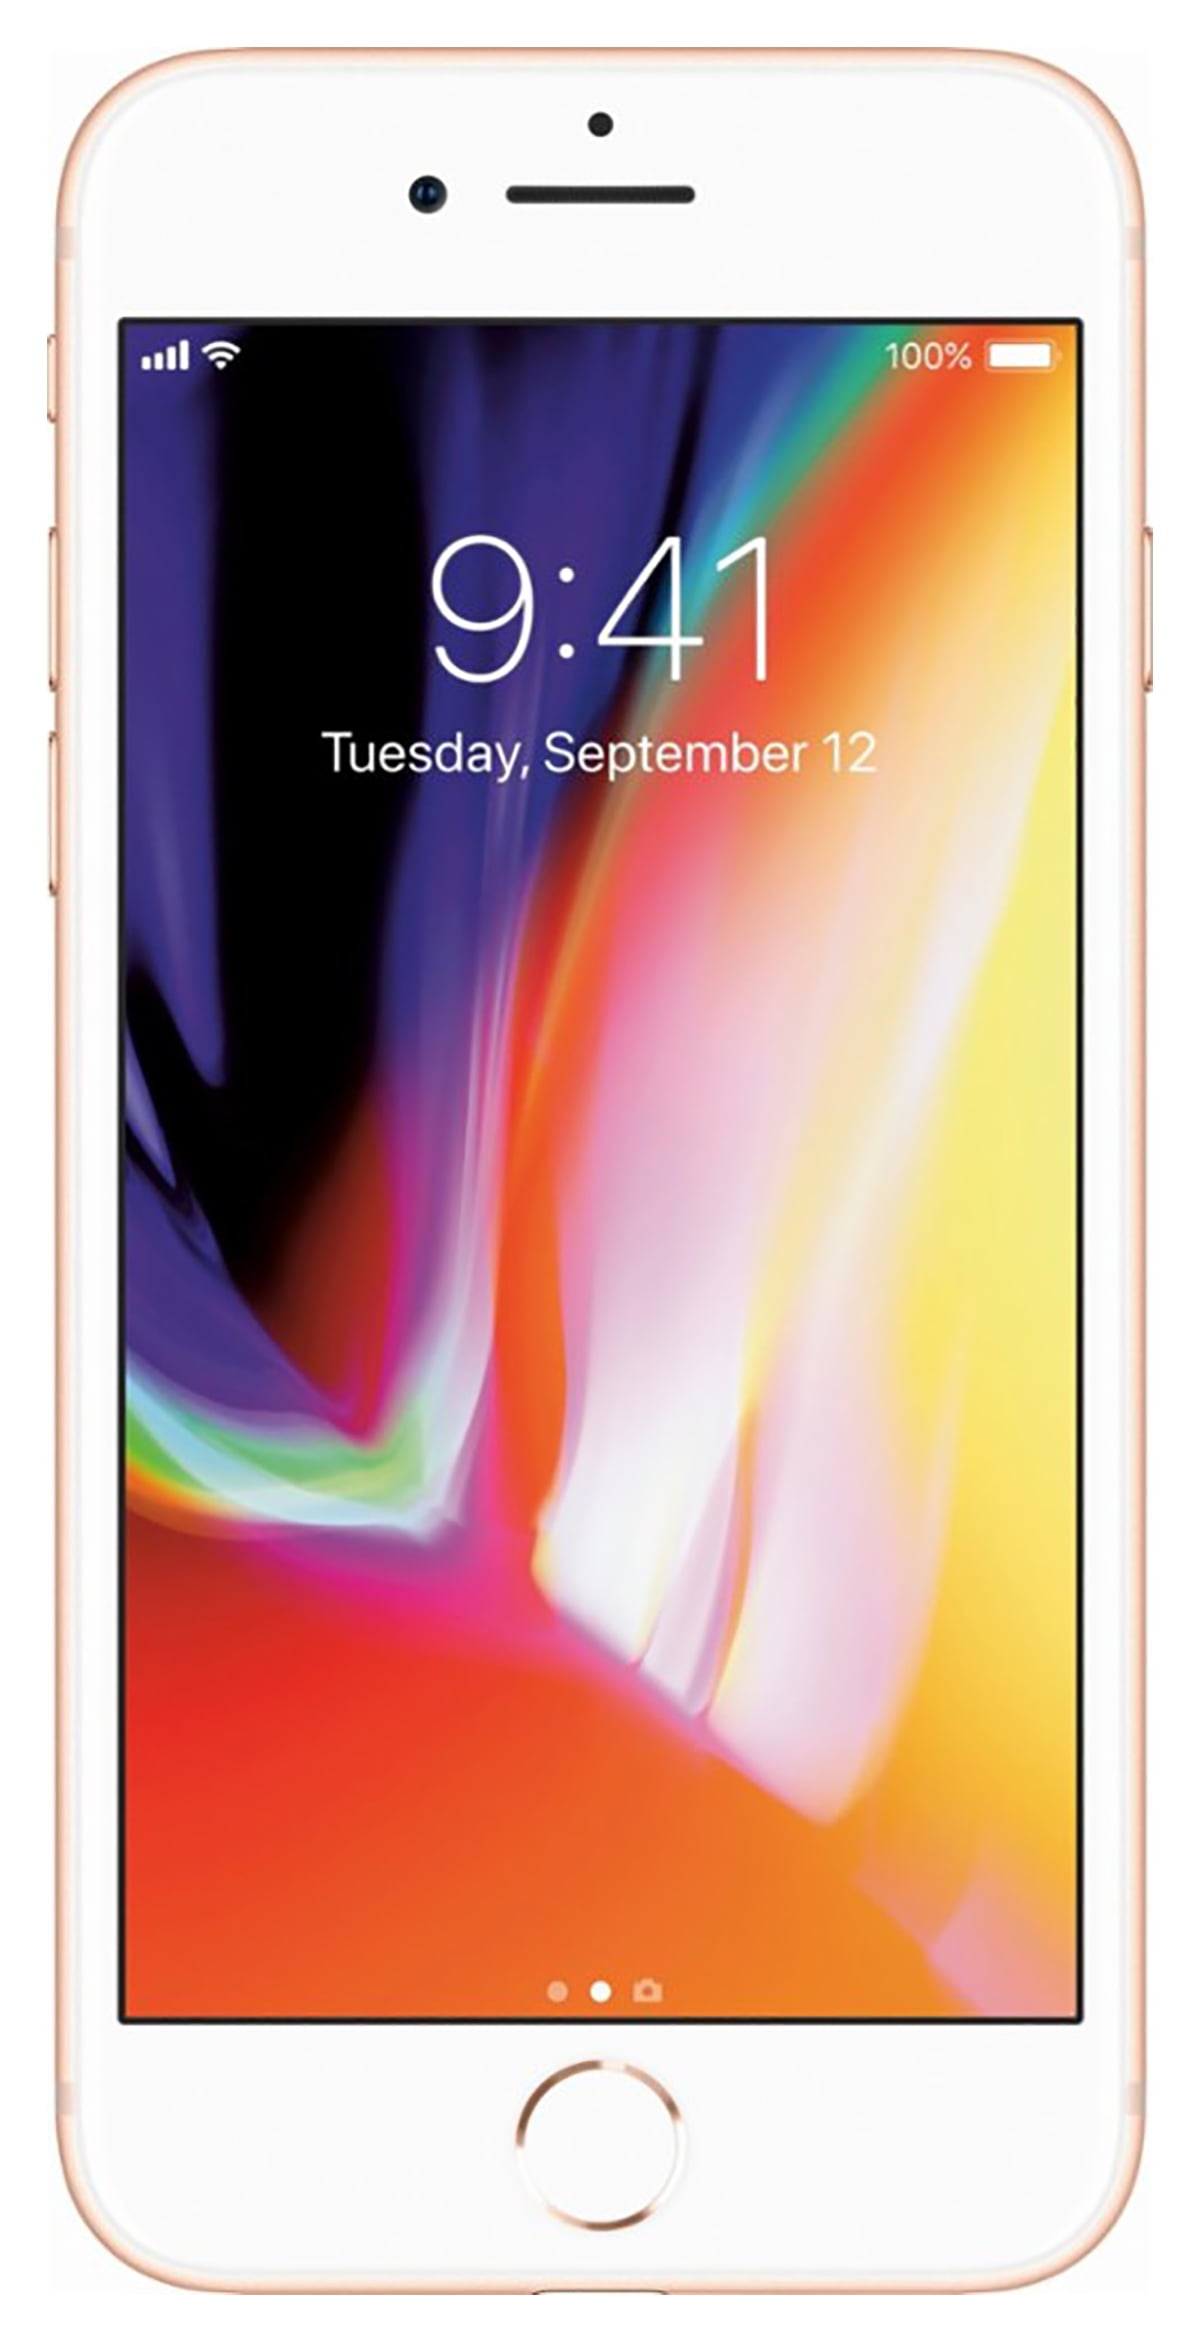 Apple iPhone 8, GSM Unlocked 4G LTE- Gold, 256GB (Used, Good